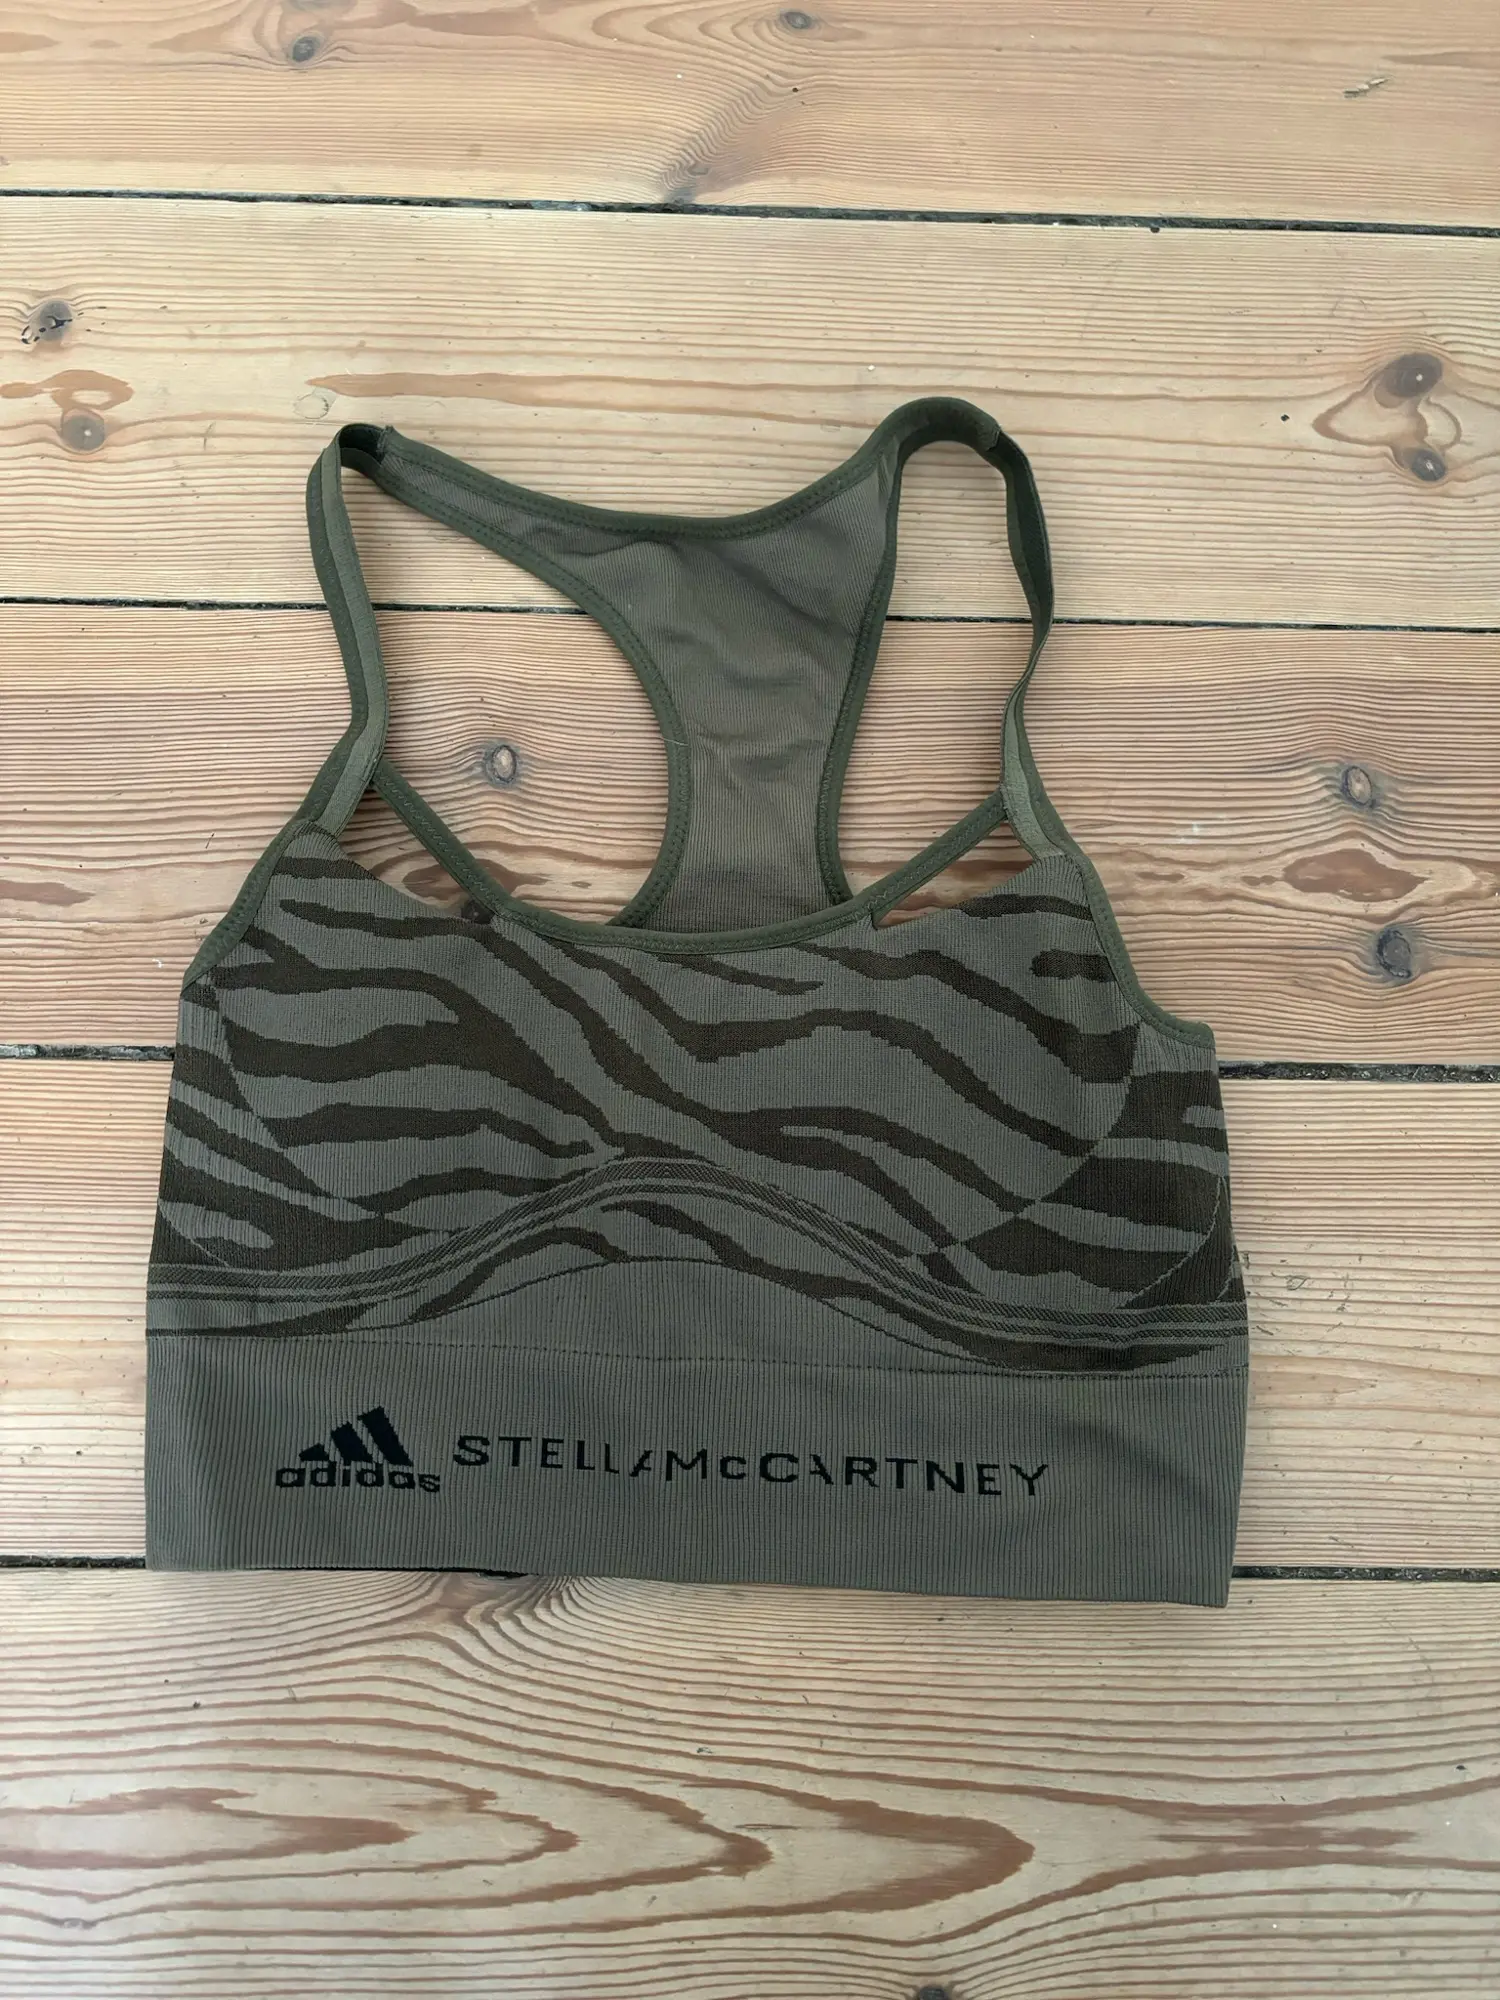 Adidas Stella Mccartney andet sportstøj